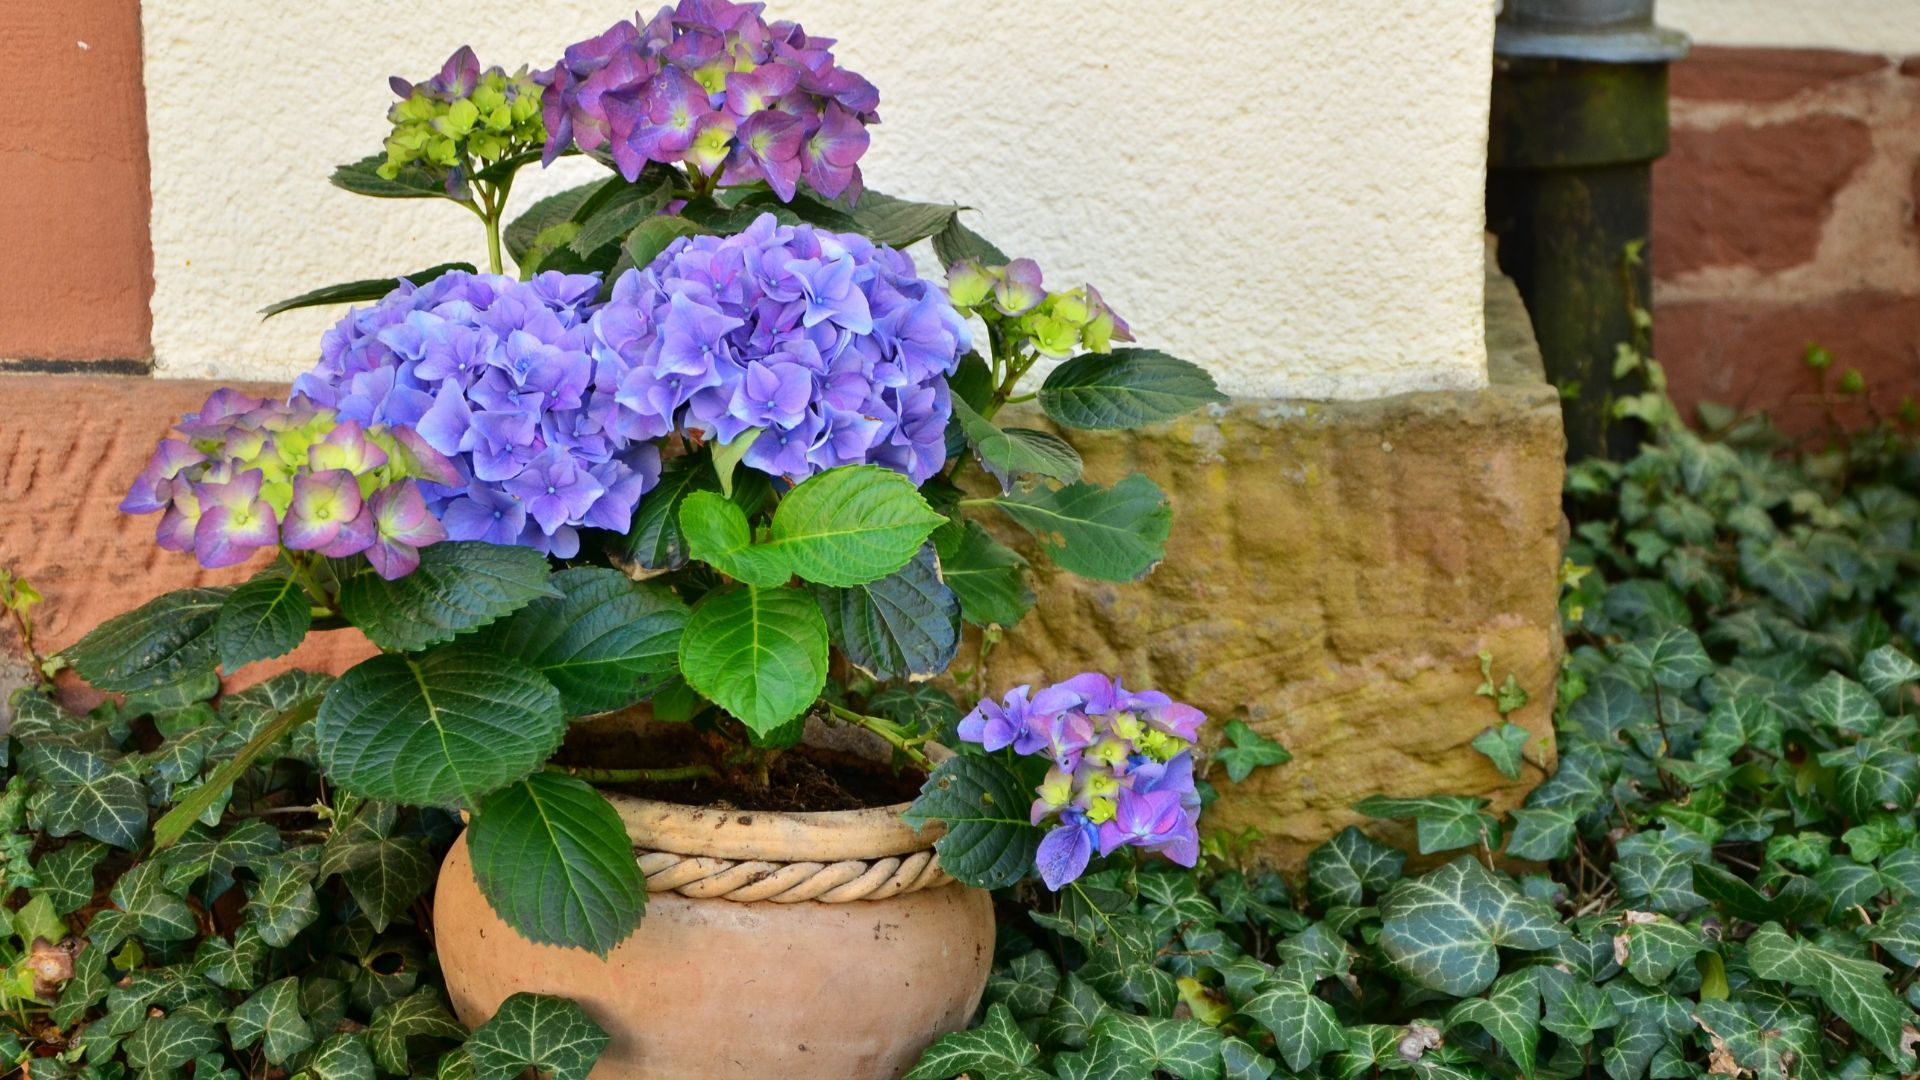 How To Grow Hydrangeas In A Pot